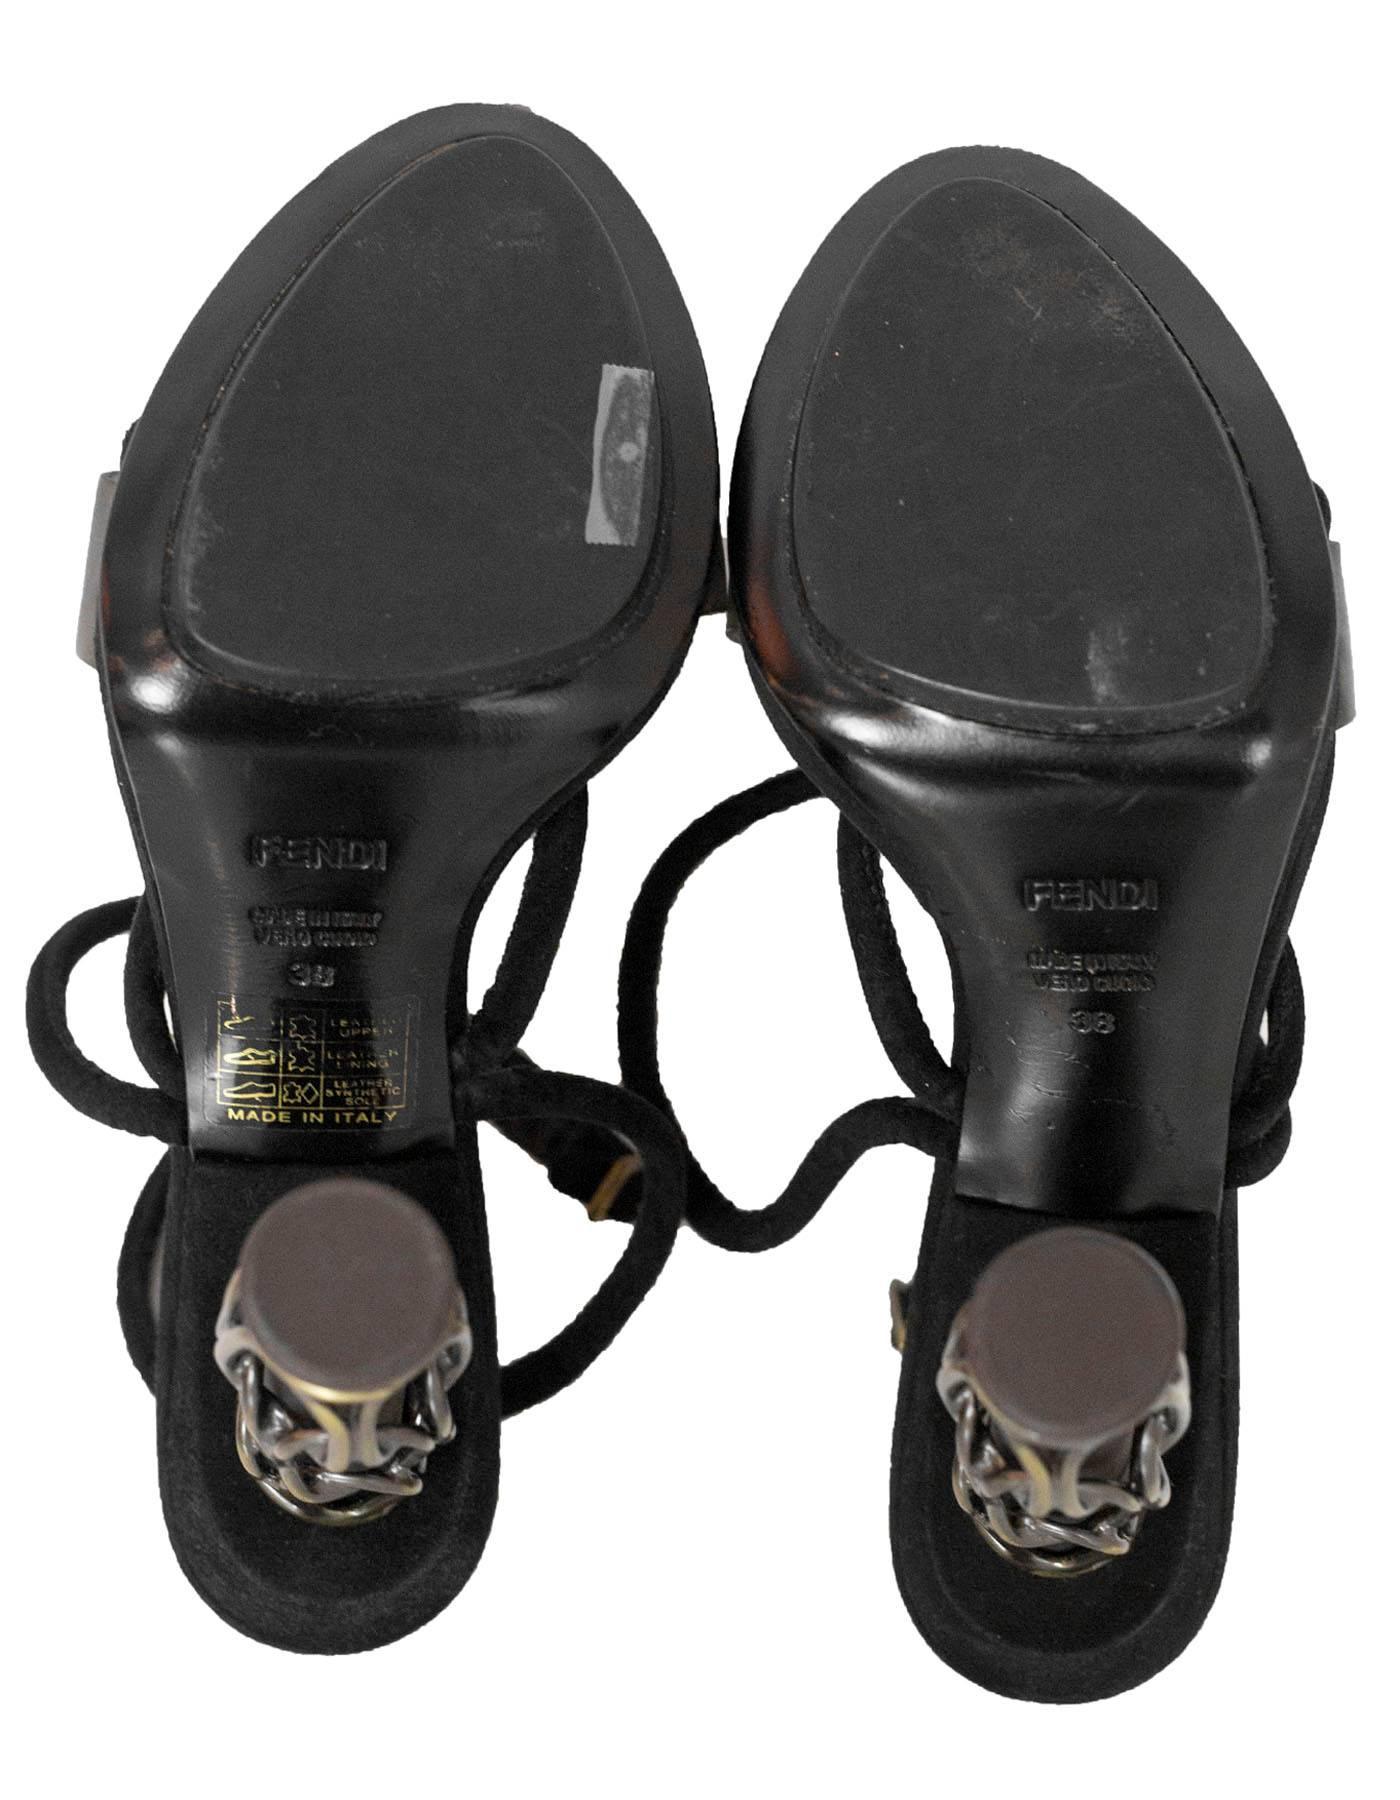 Women's Fendi Black Suede Sandals with Caged Heels Sz 38